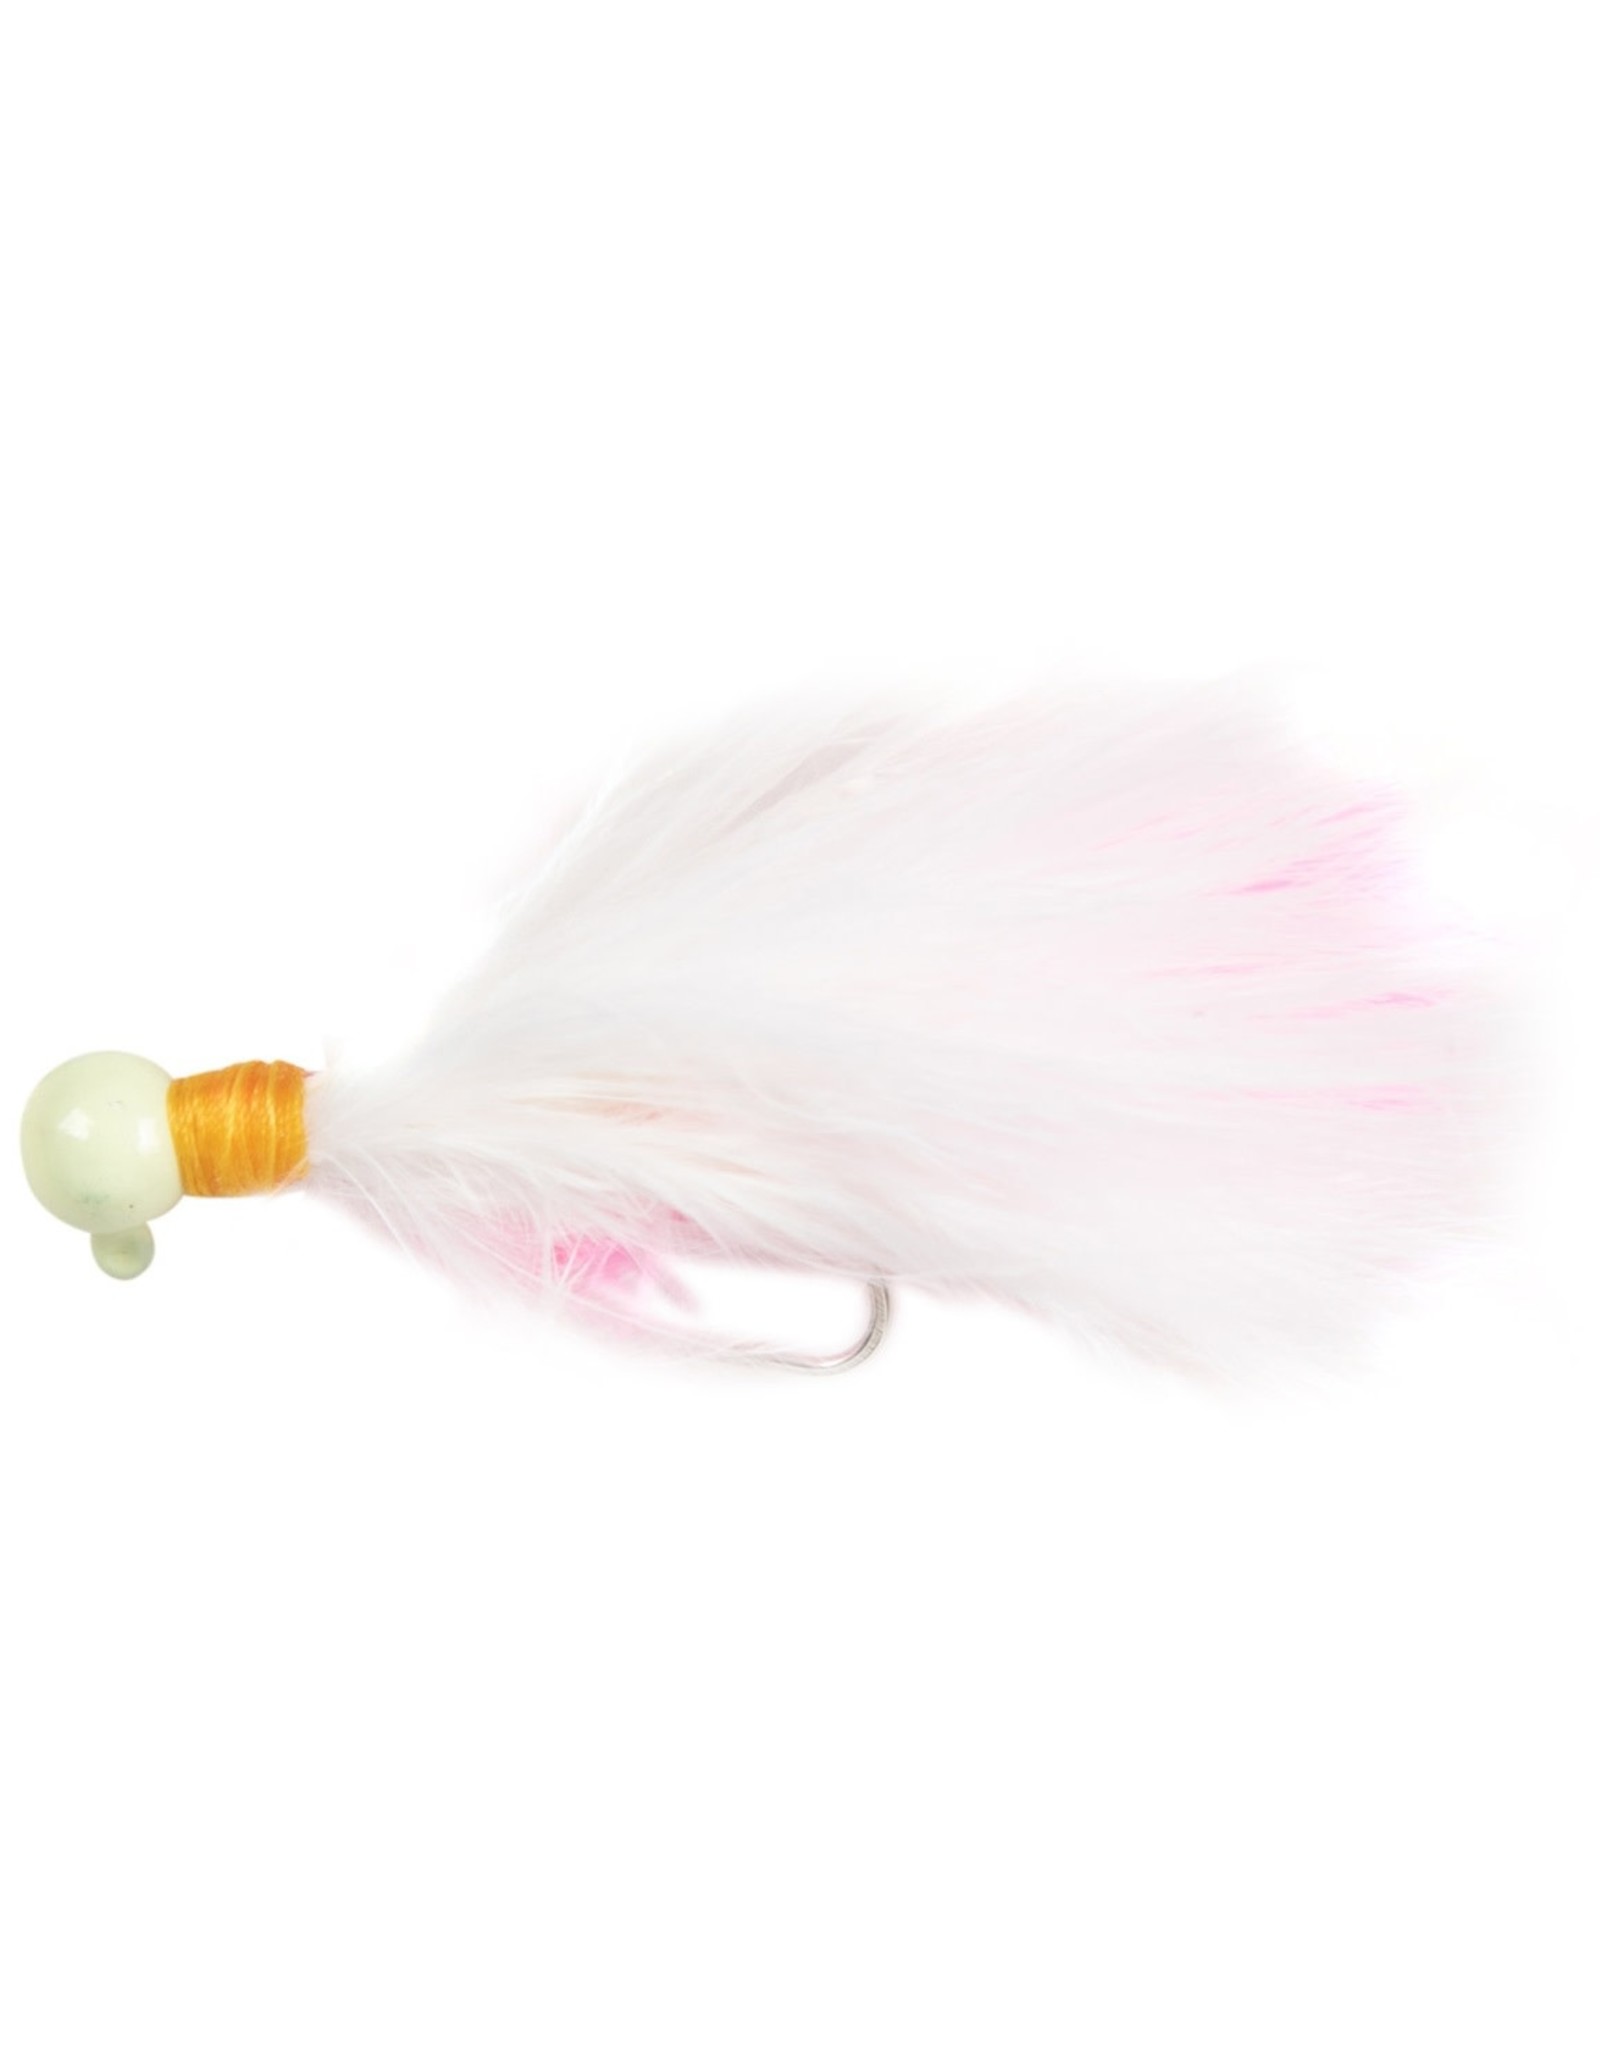 Danielson Steelhead/Salmon Jig 1/8 Oz - Pink/White/Glow